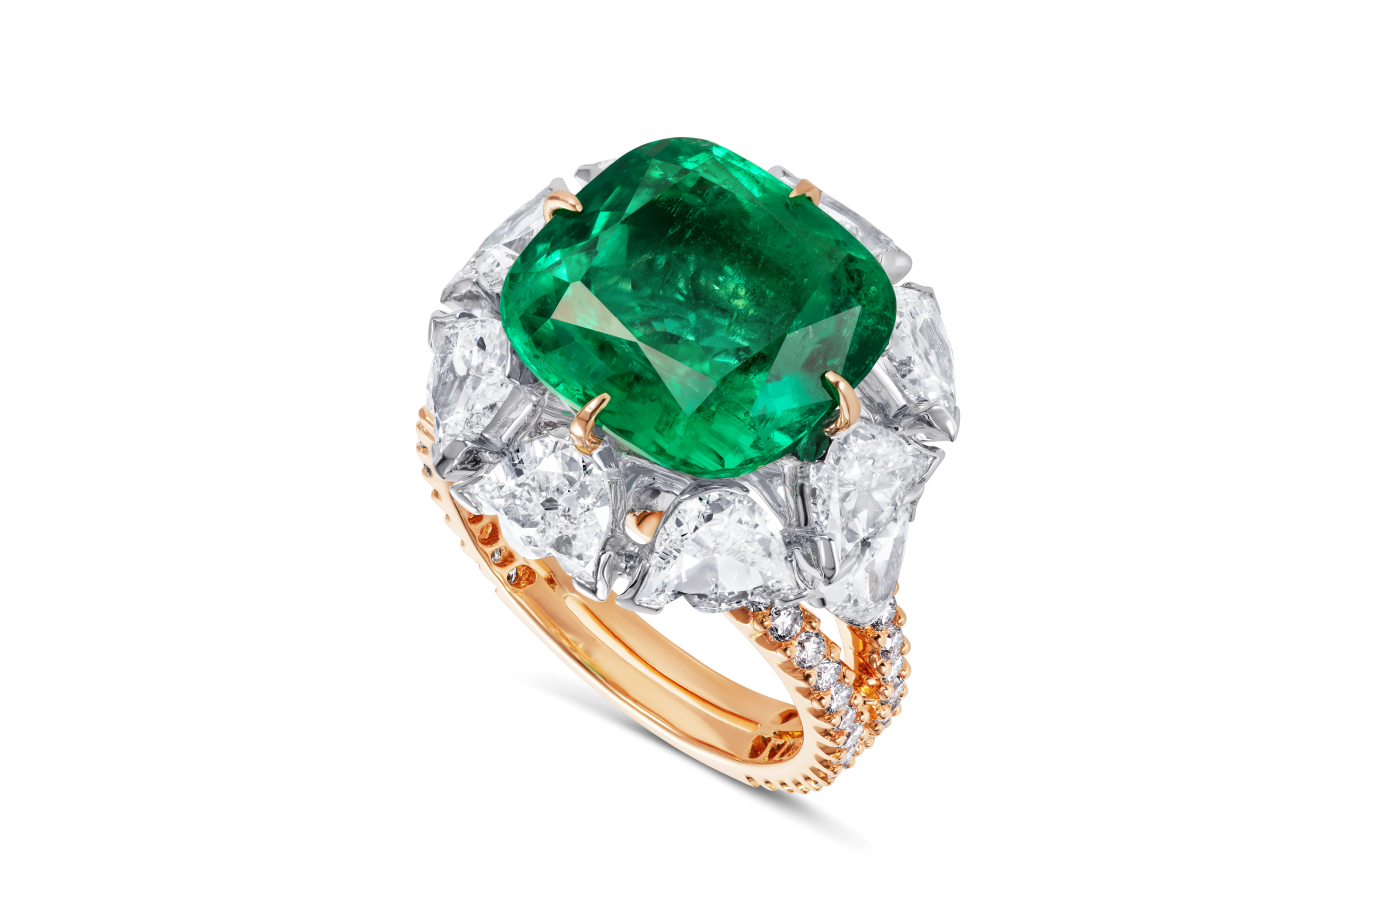 Alok Lodha gold, emerald and diamond ring 